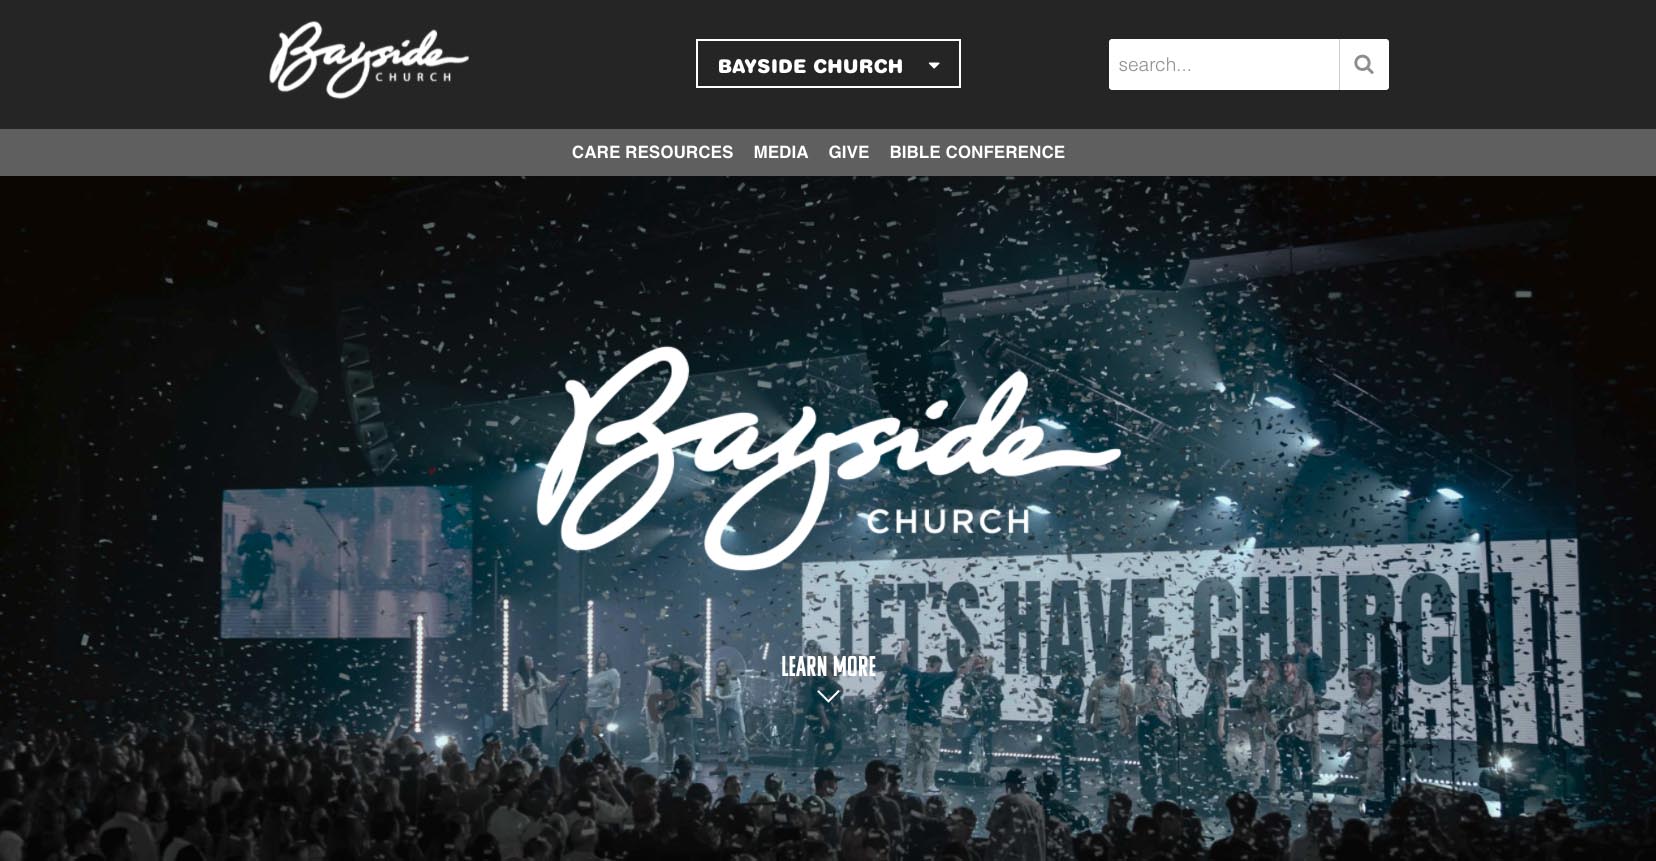 Bayside church homepage